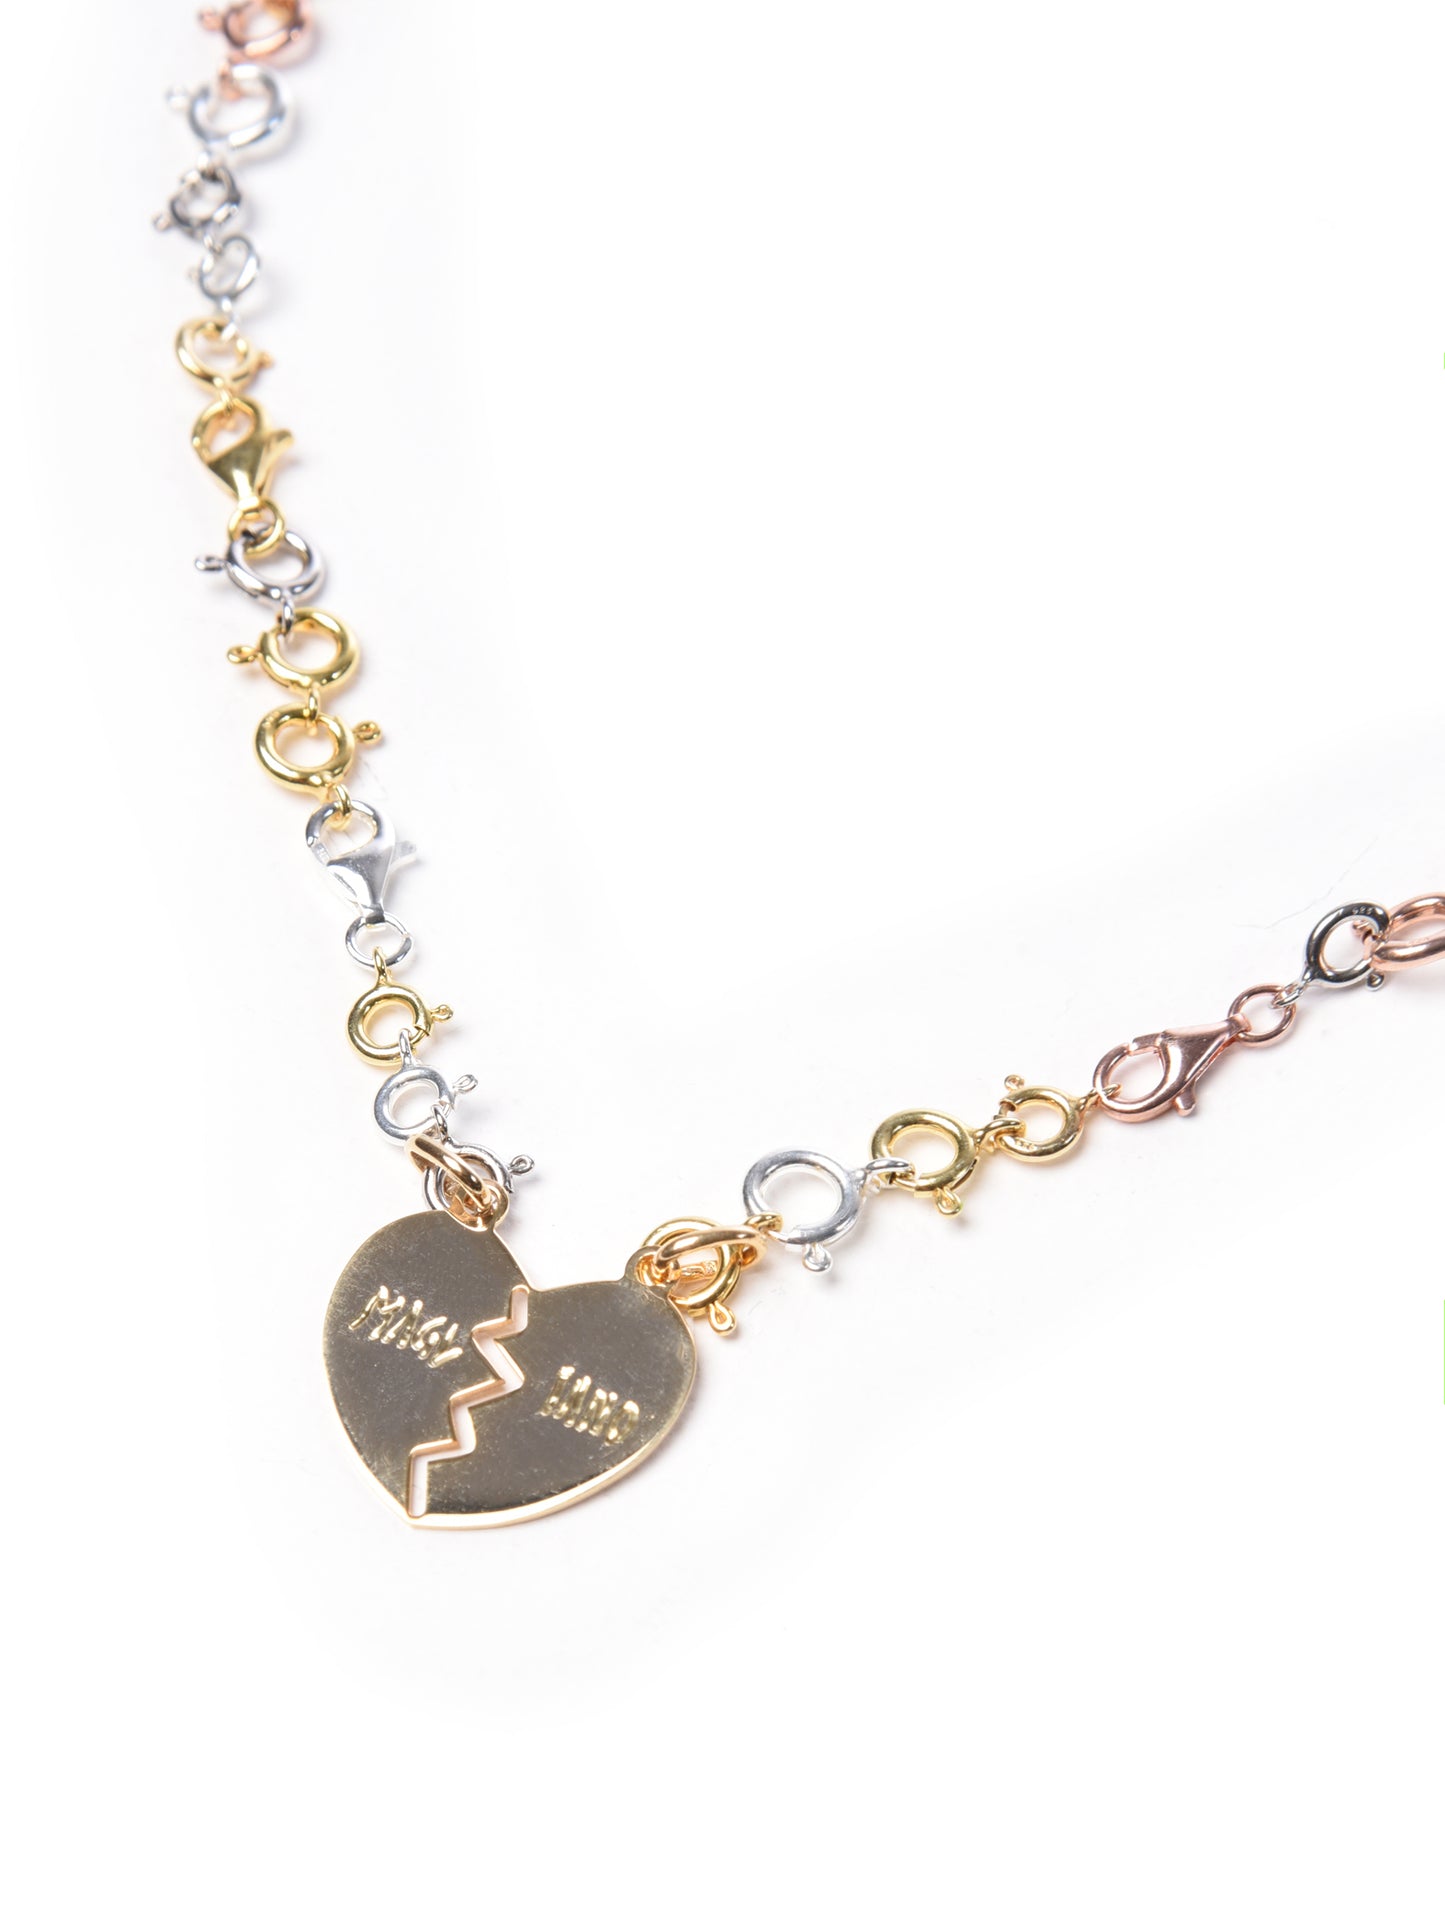 Magliano Golden Broken Heart Necklace